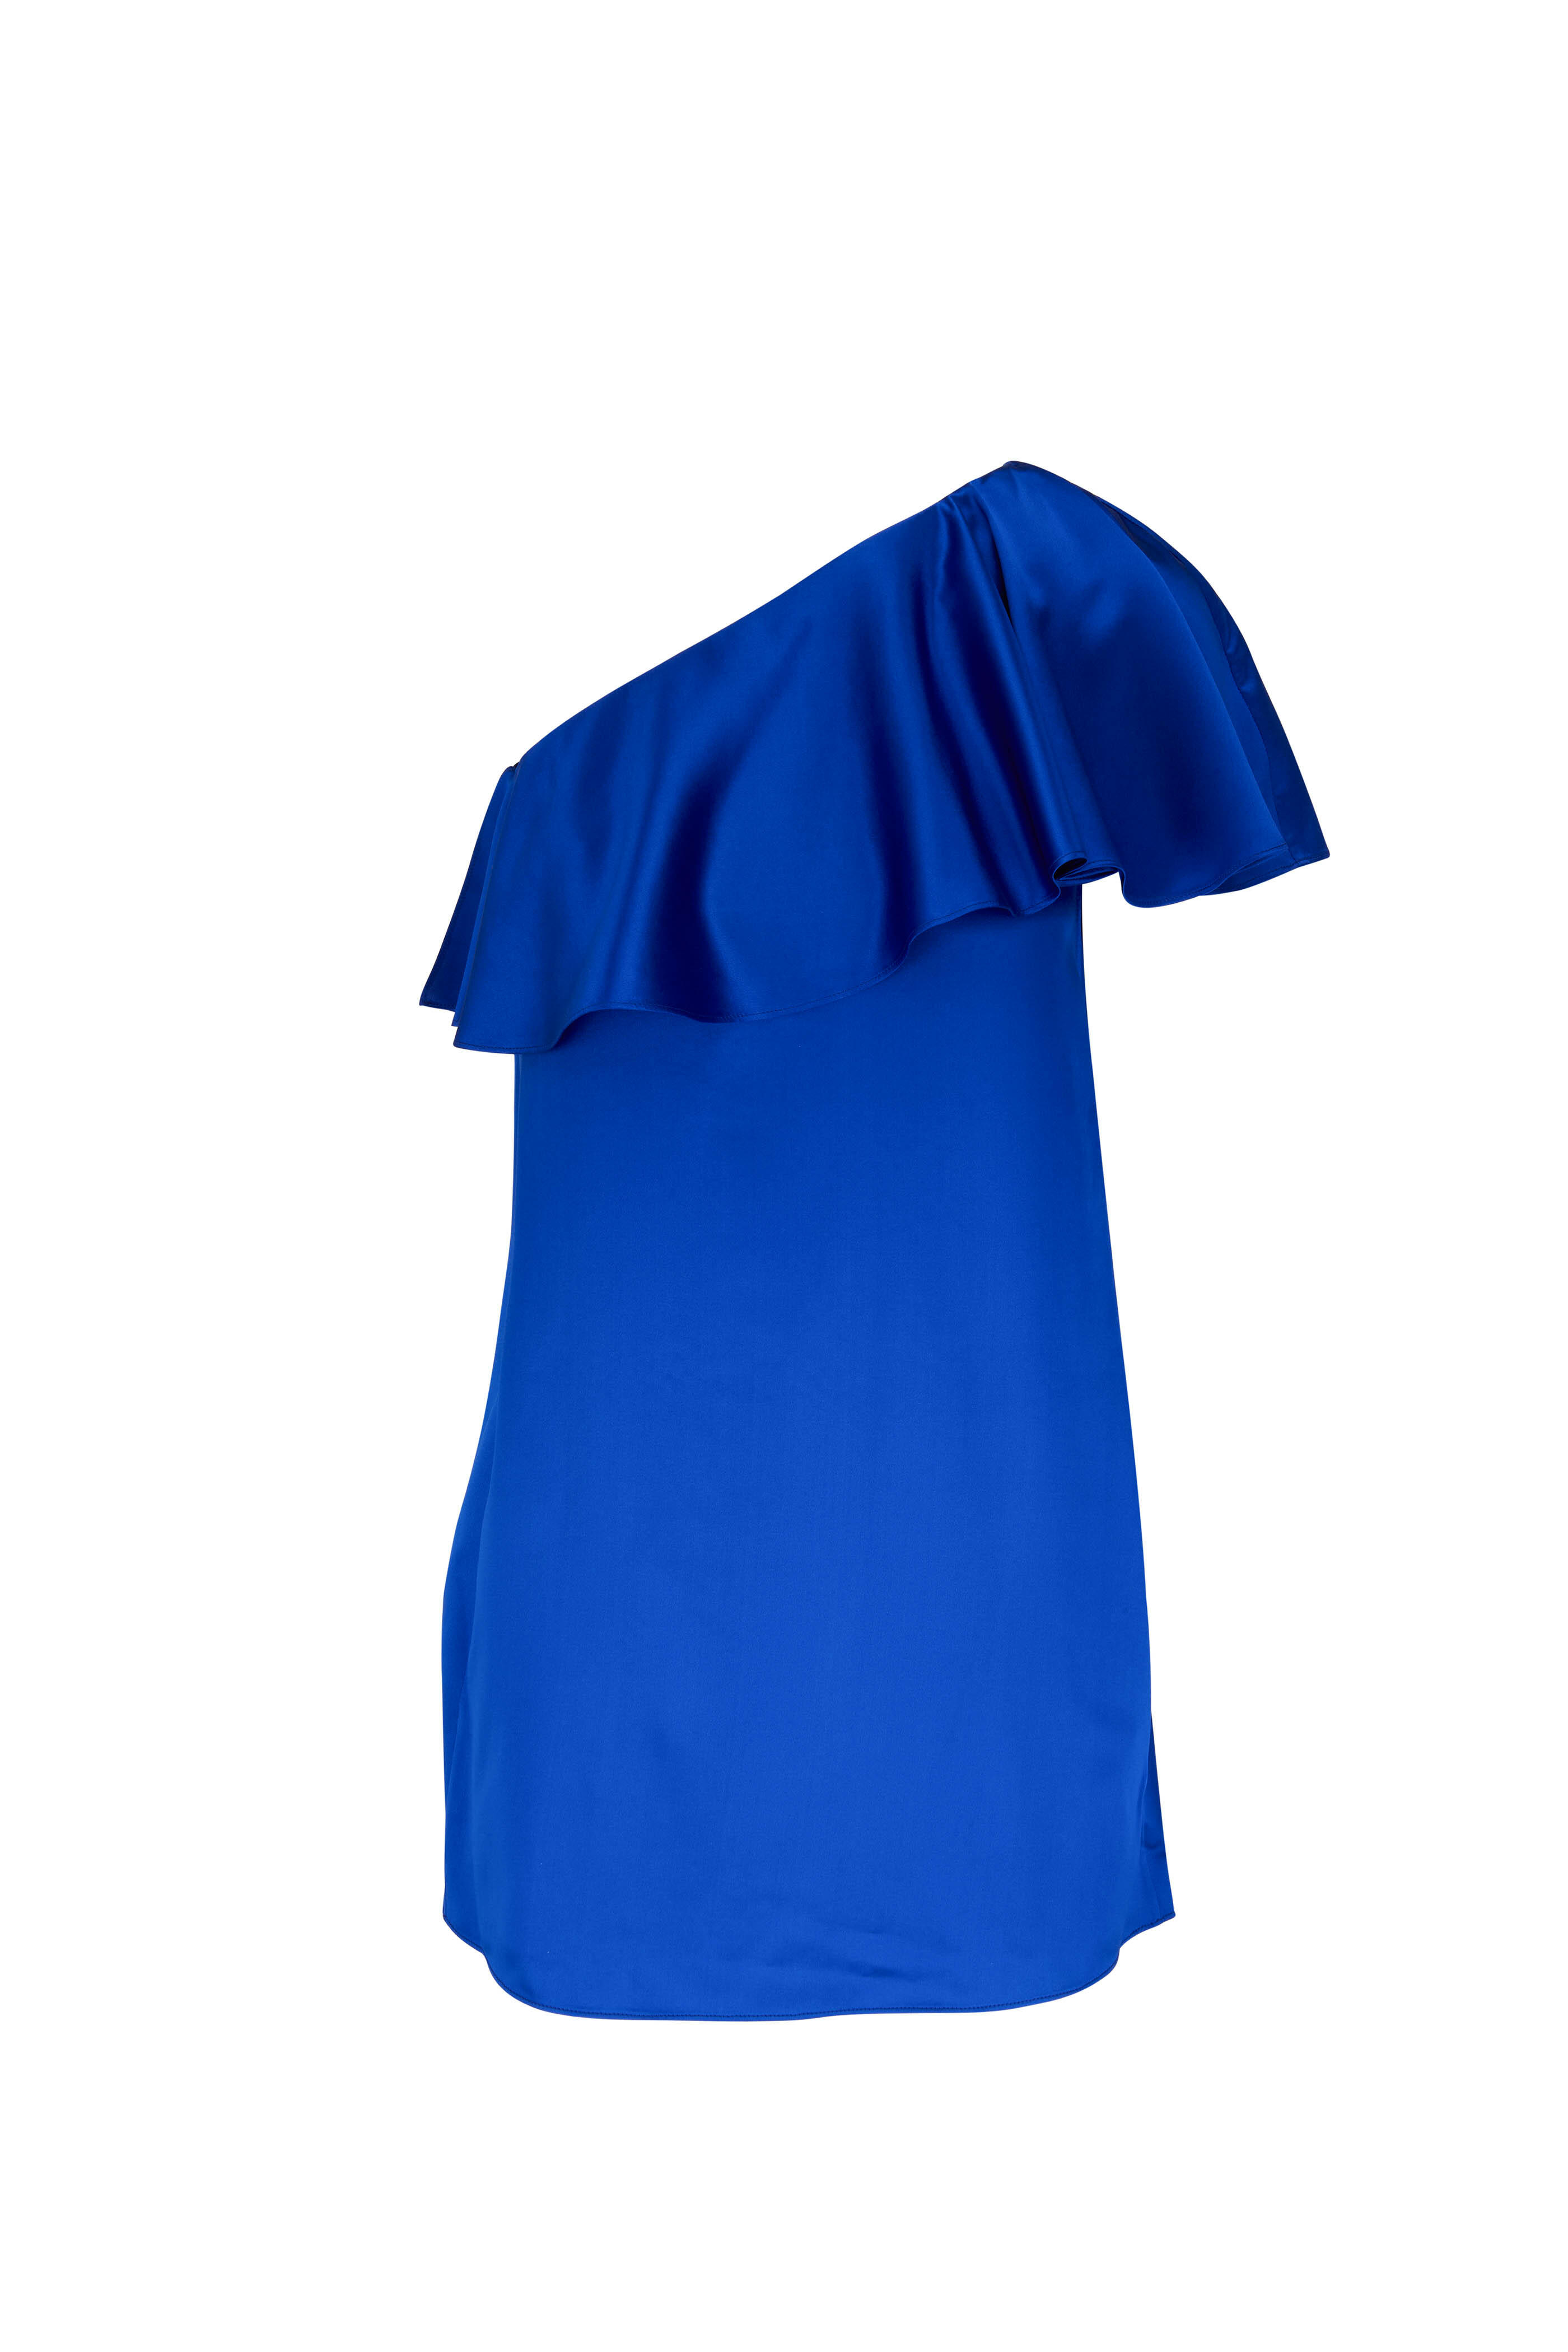 Saint Laurent - Bright Blue Silk One-Shoulder Mini Dress